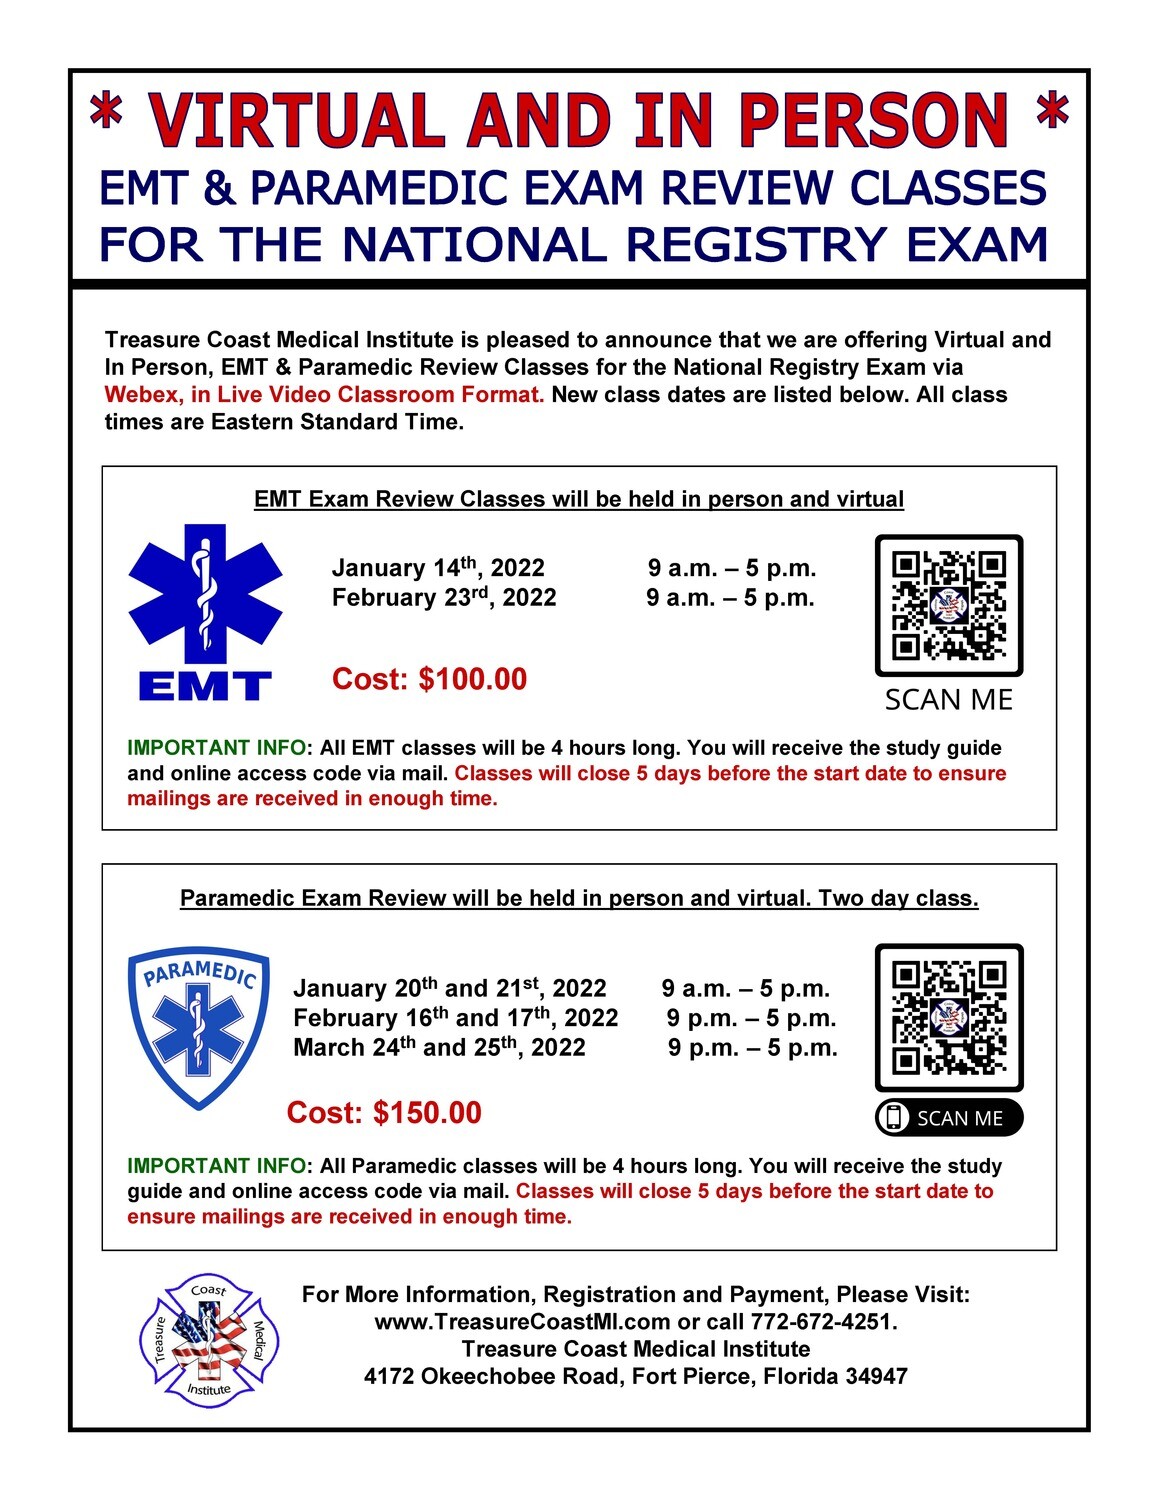 National Registry Paramedic January 20th and 21st
Fort Pierce TCMI (VIRTUAL VIA WEBEX 9-5pm)